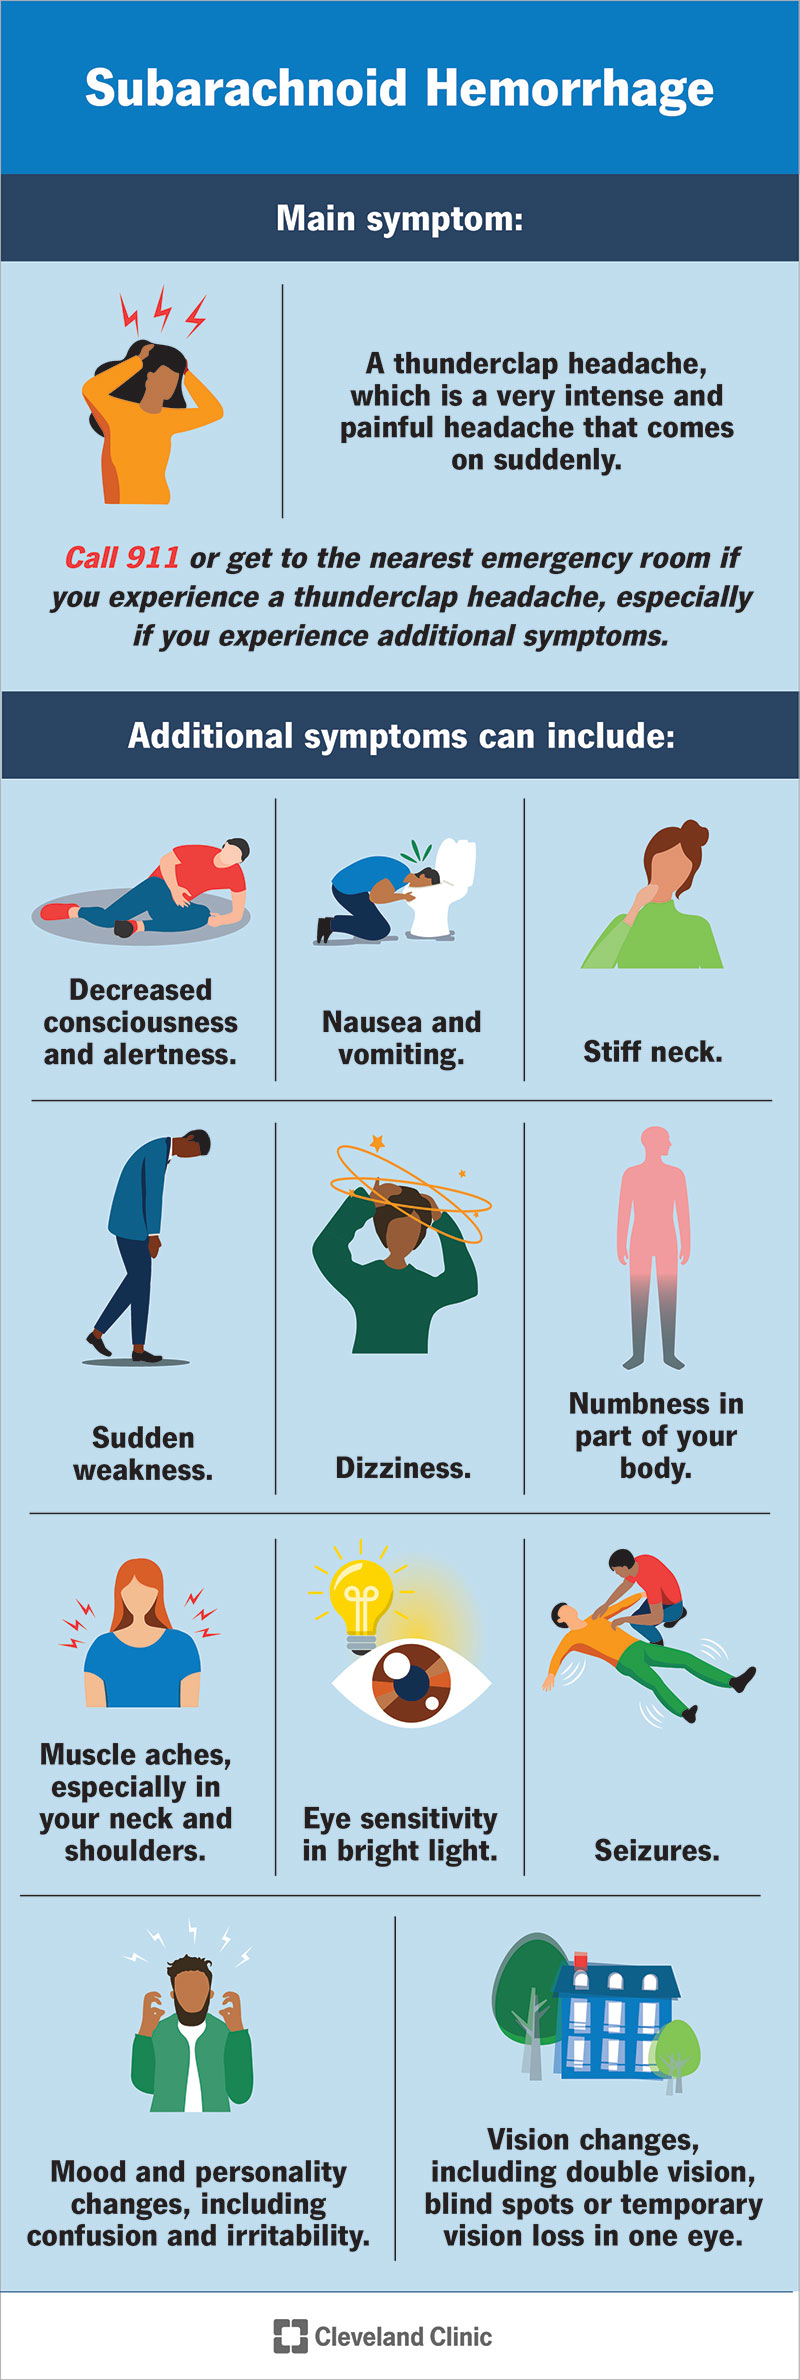 The main symptom of SAH is a a sudden and severe headache.